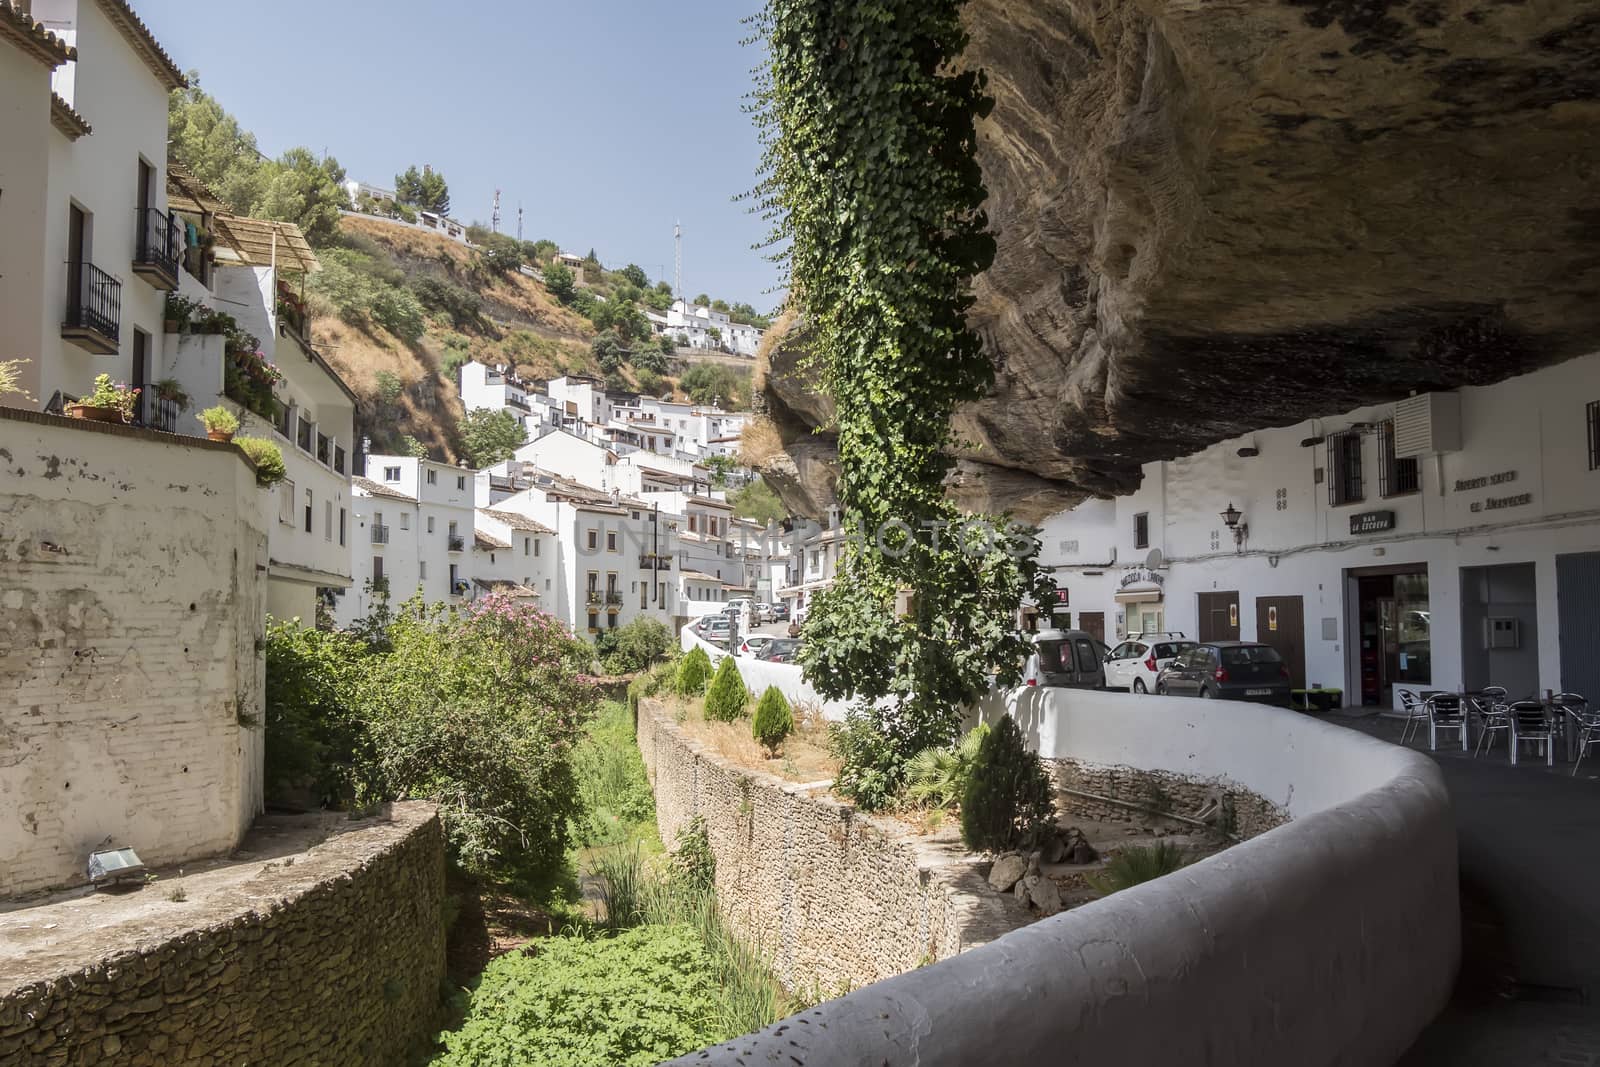 Setenil de las Bodegas, Cadiz, Spain. Street with dwellings built into rock overhangs above Rio Trejo. 